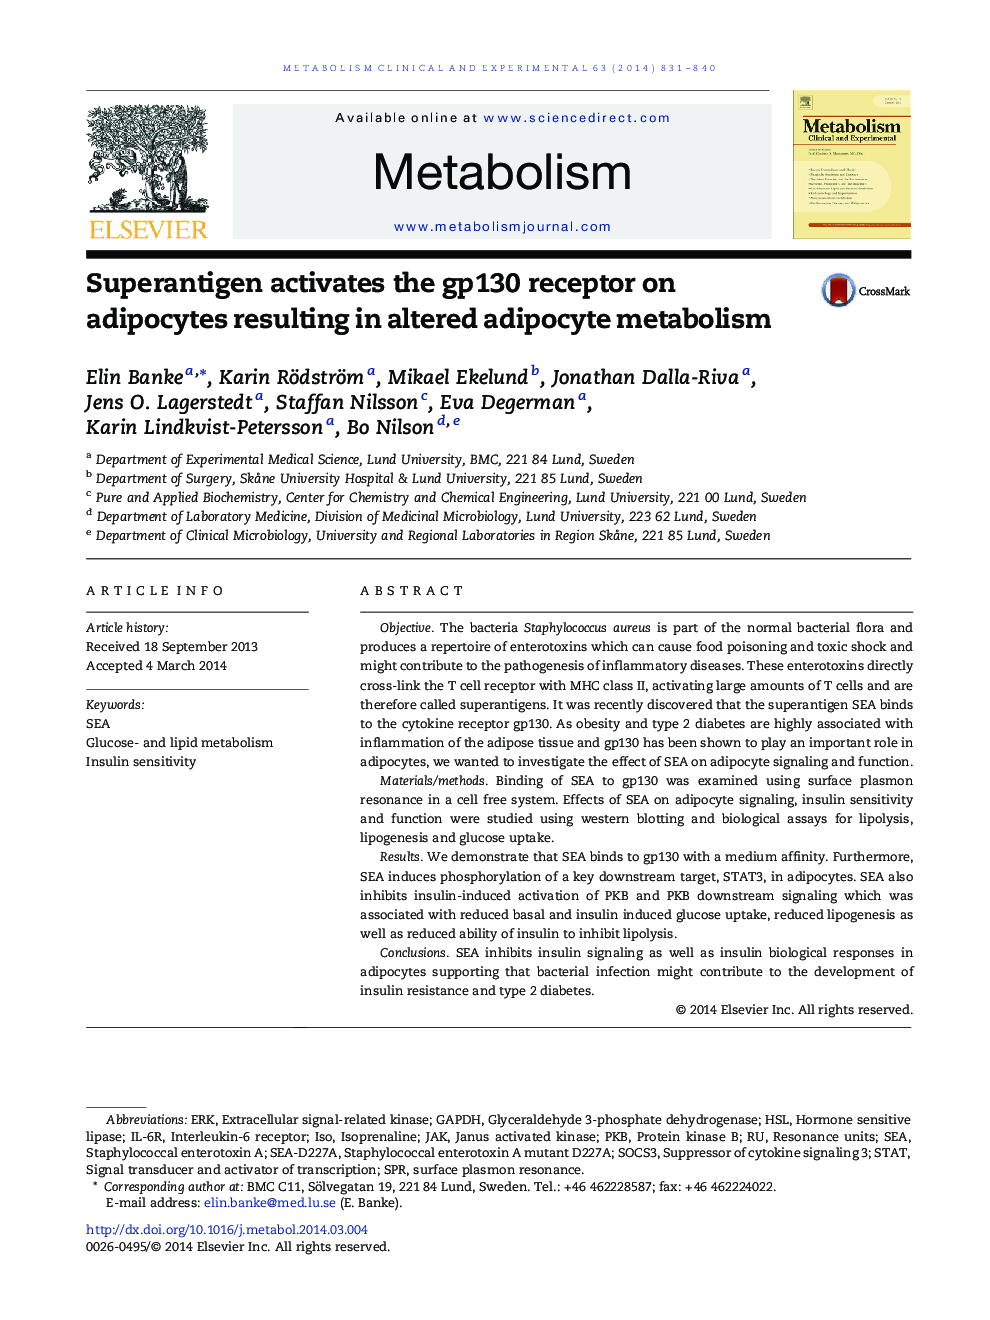 Superantigen activates the gp130 receptor on adipocytes resulting in altered adipocyte metabolism